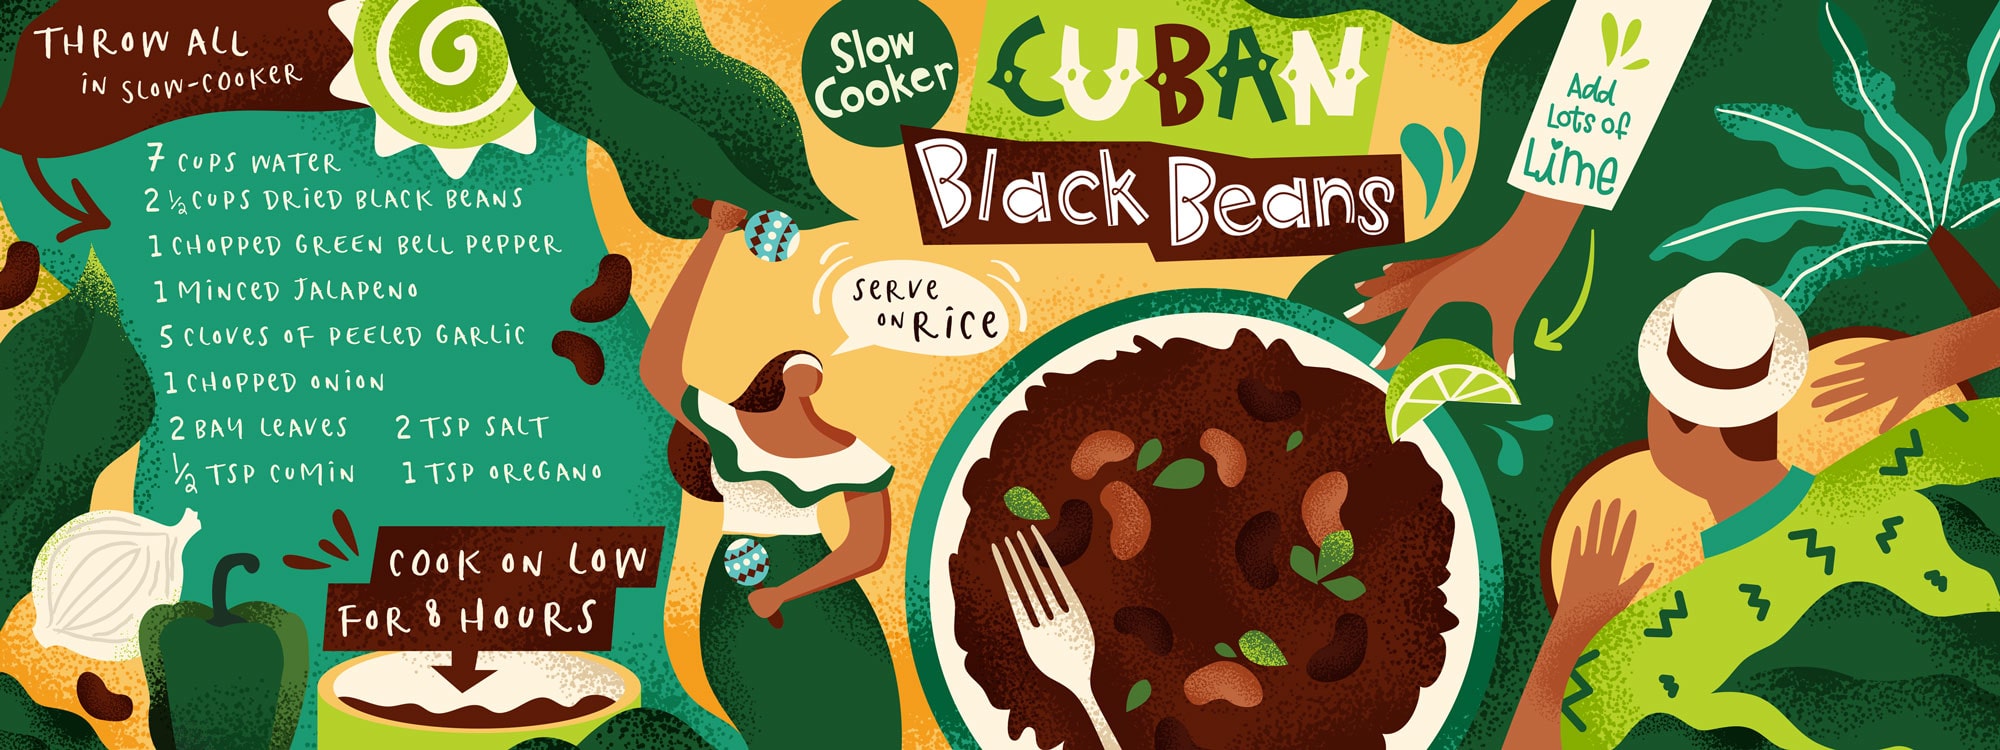 cuban black beans illustration